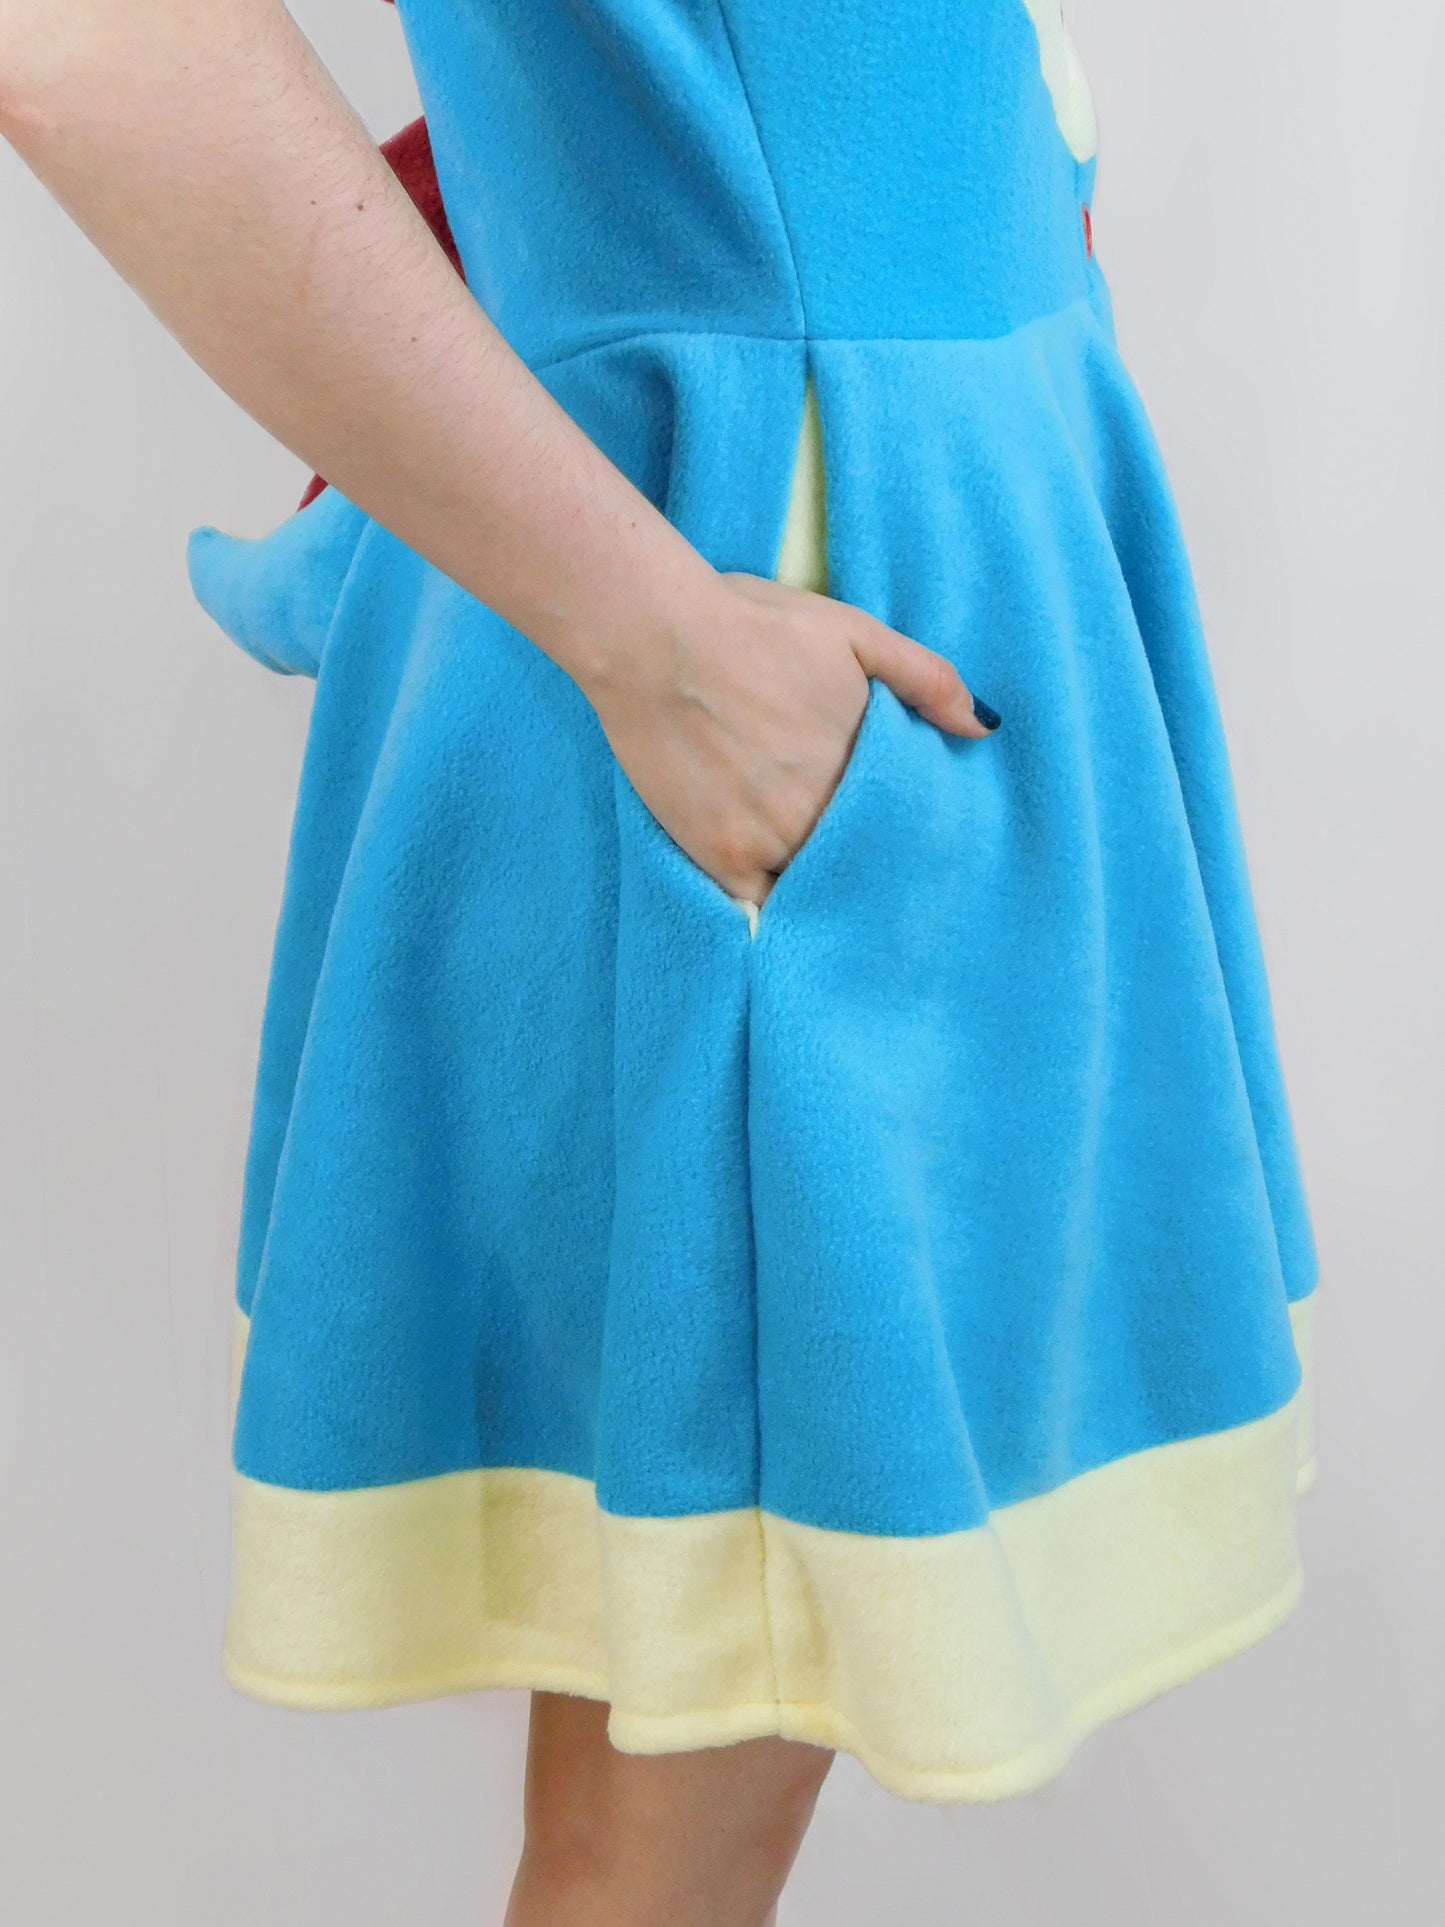 Totodile Inspired Kigurumi Dress